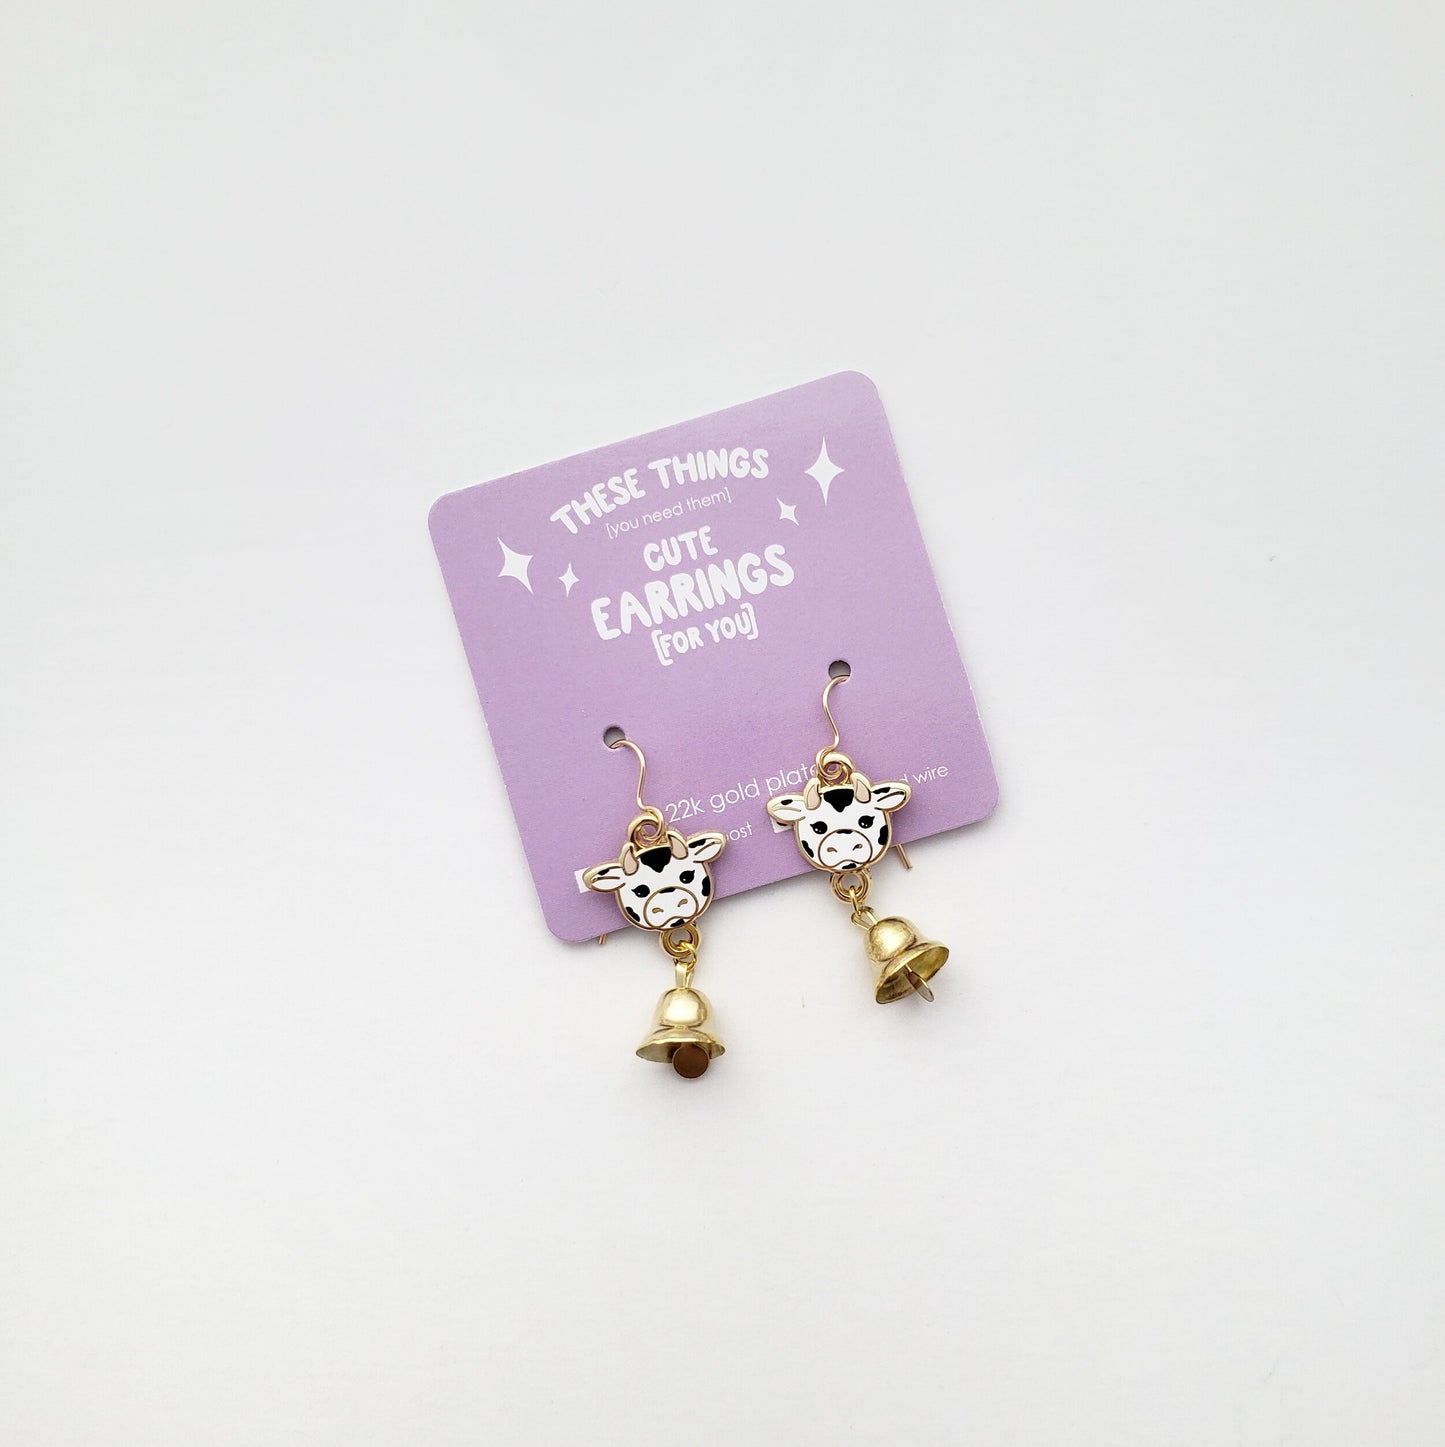 Moo Cow earrings